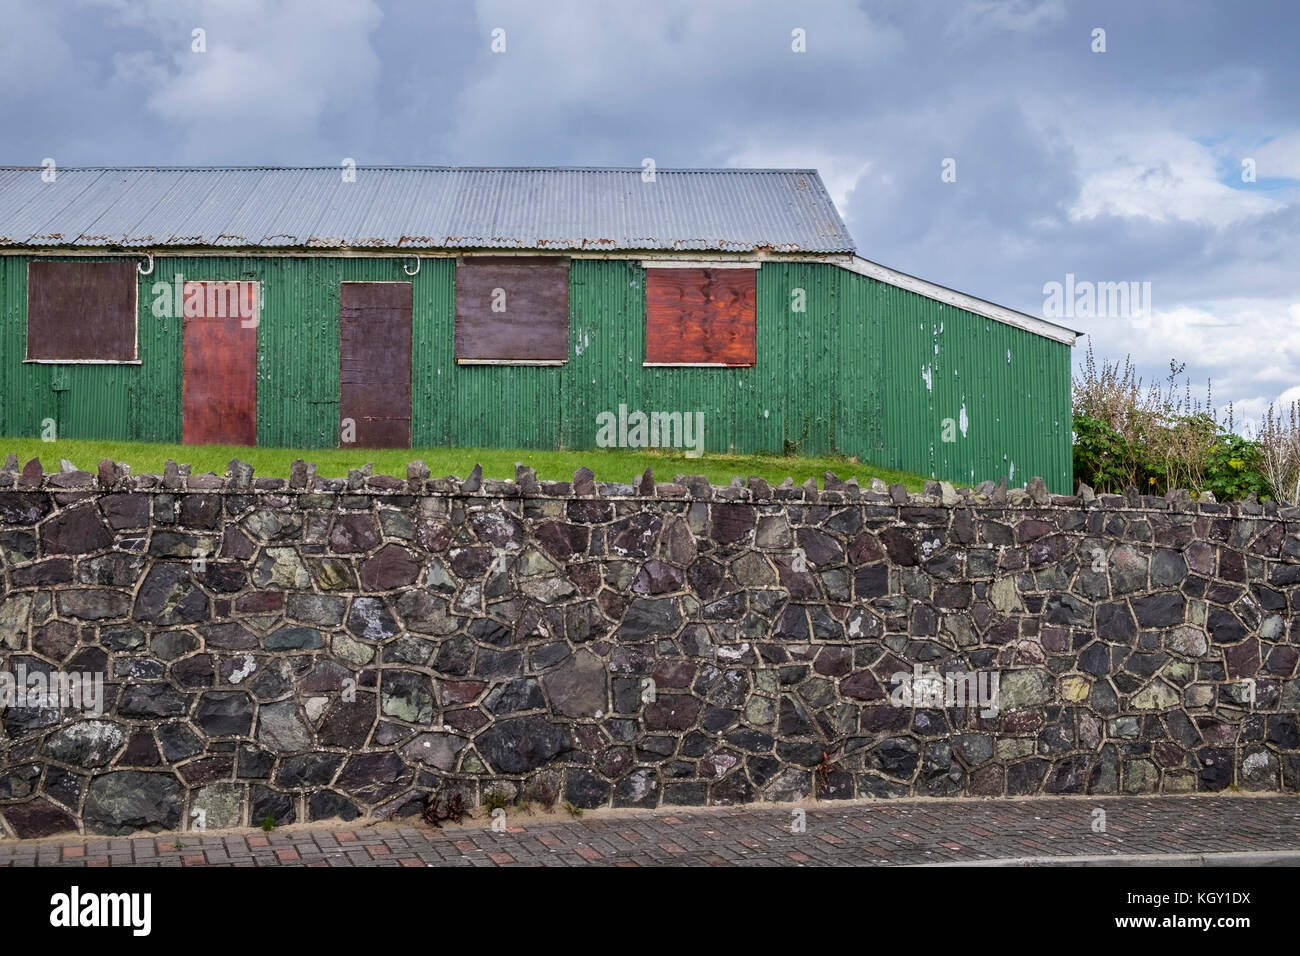 Wellblech vergossen, Zinn Hütte, Industriebrachen, Laytown, County Meath, Irland an Bord Stockfoto